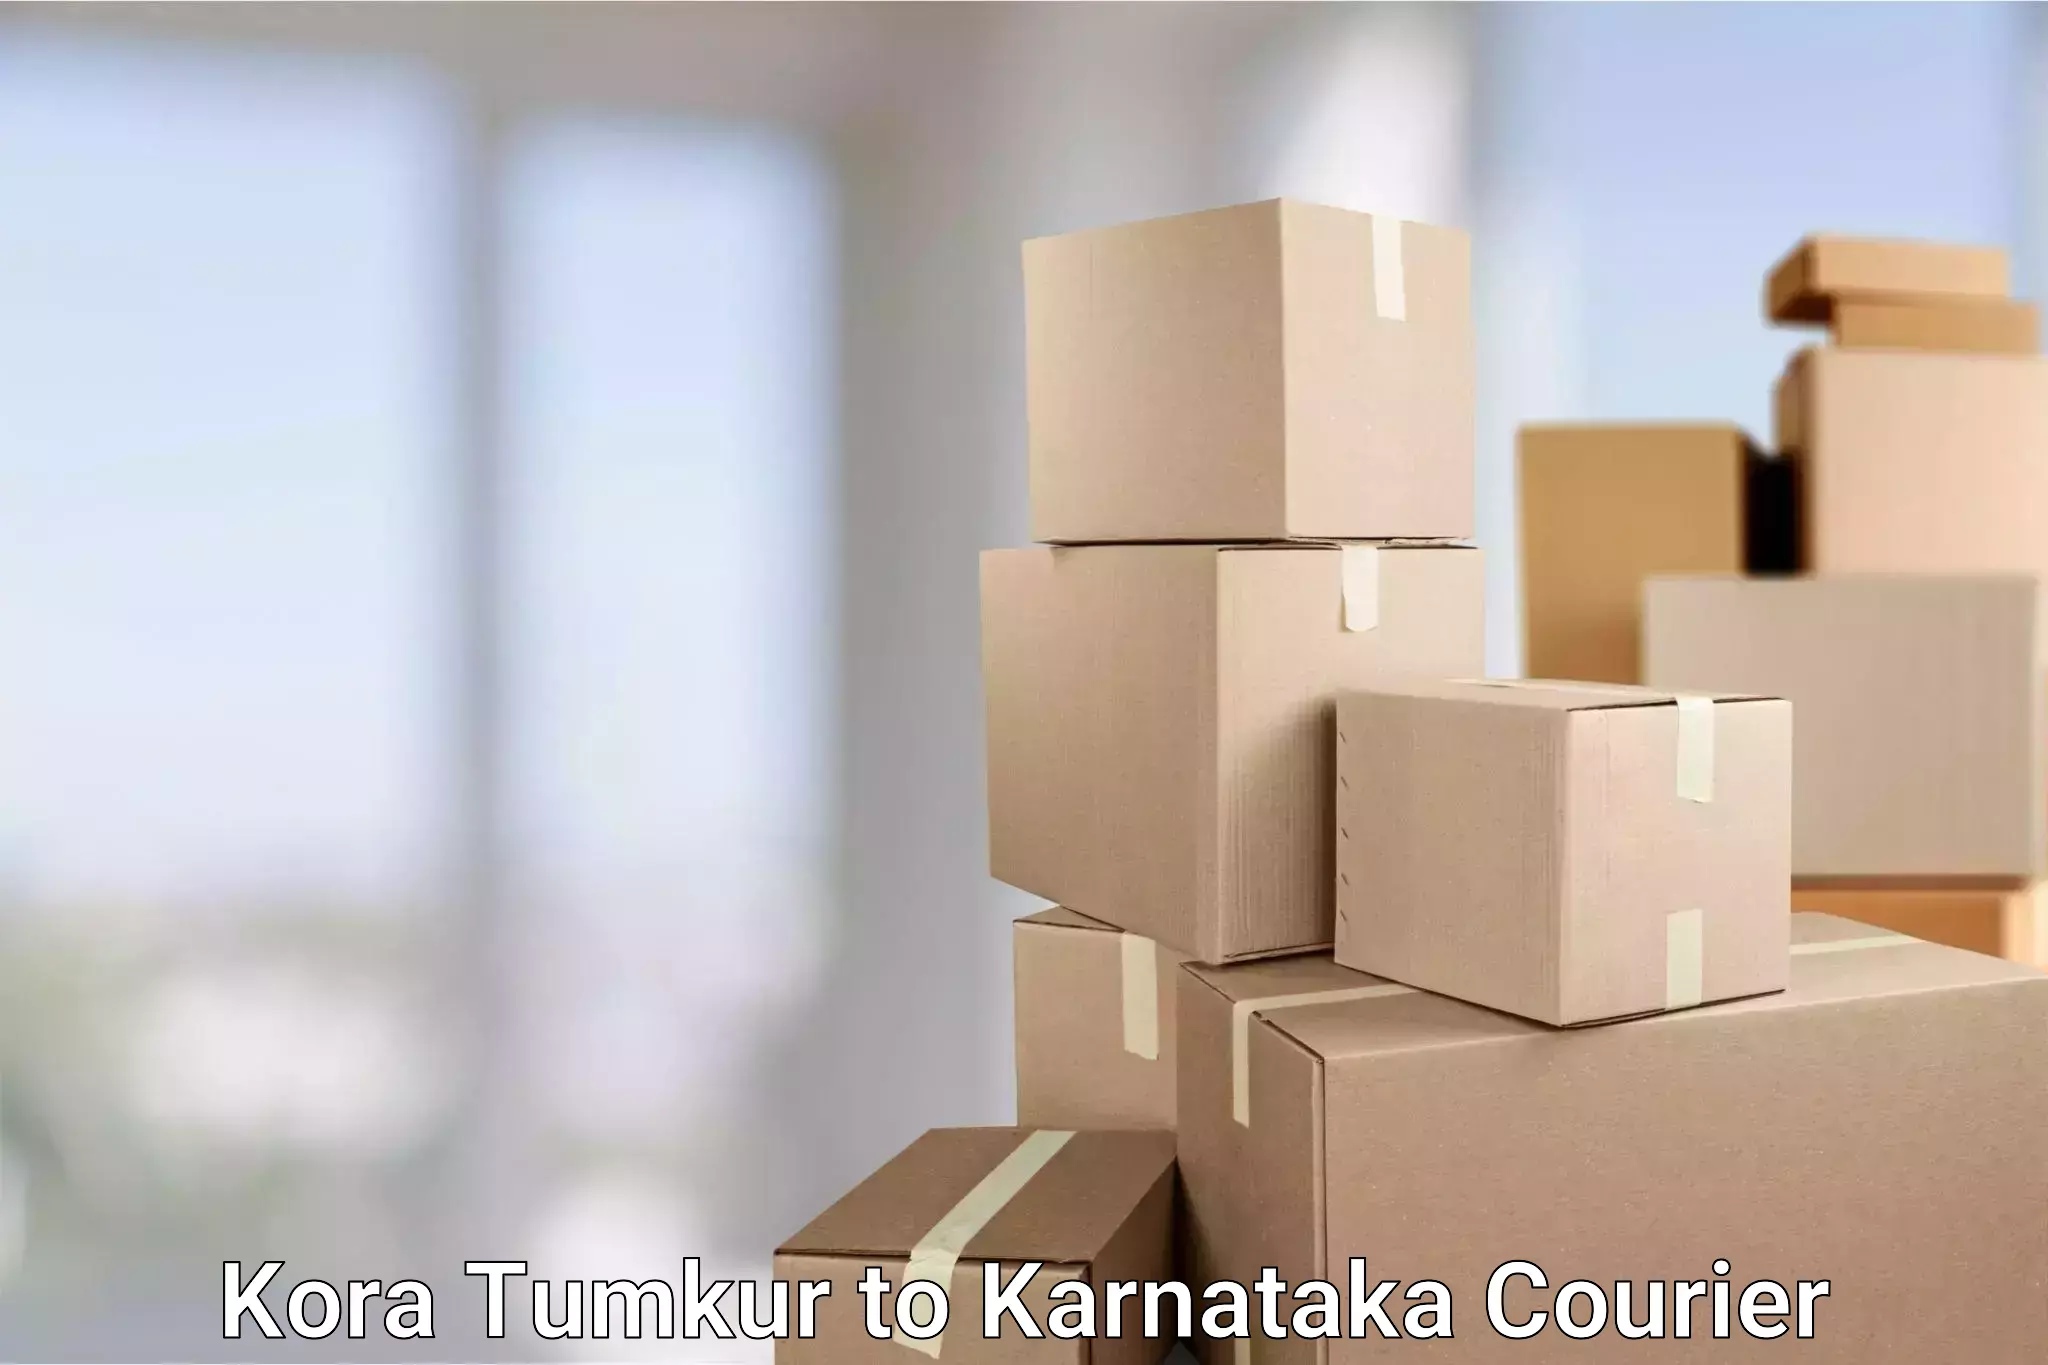 Modern delivery methods Kora Tumkur to Karnataka